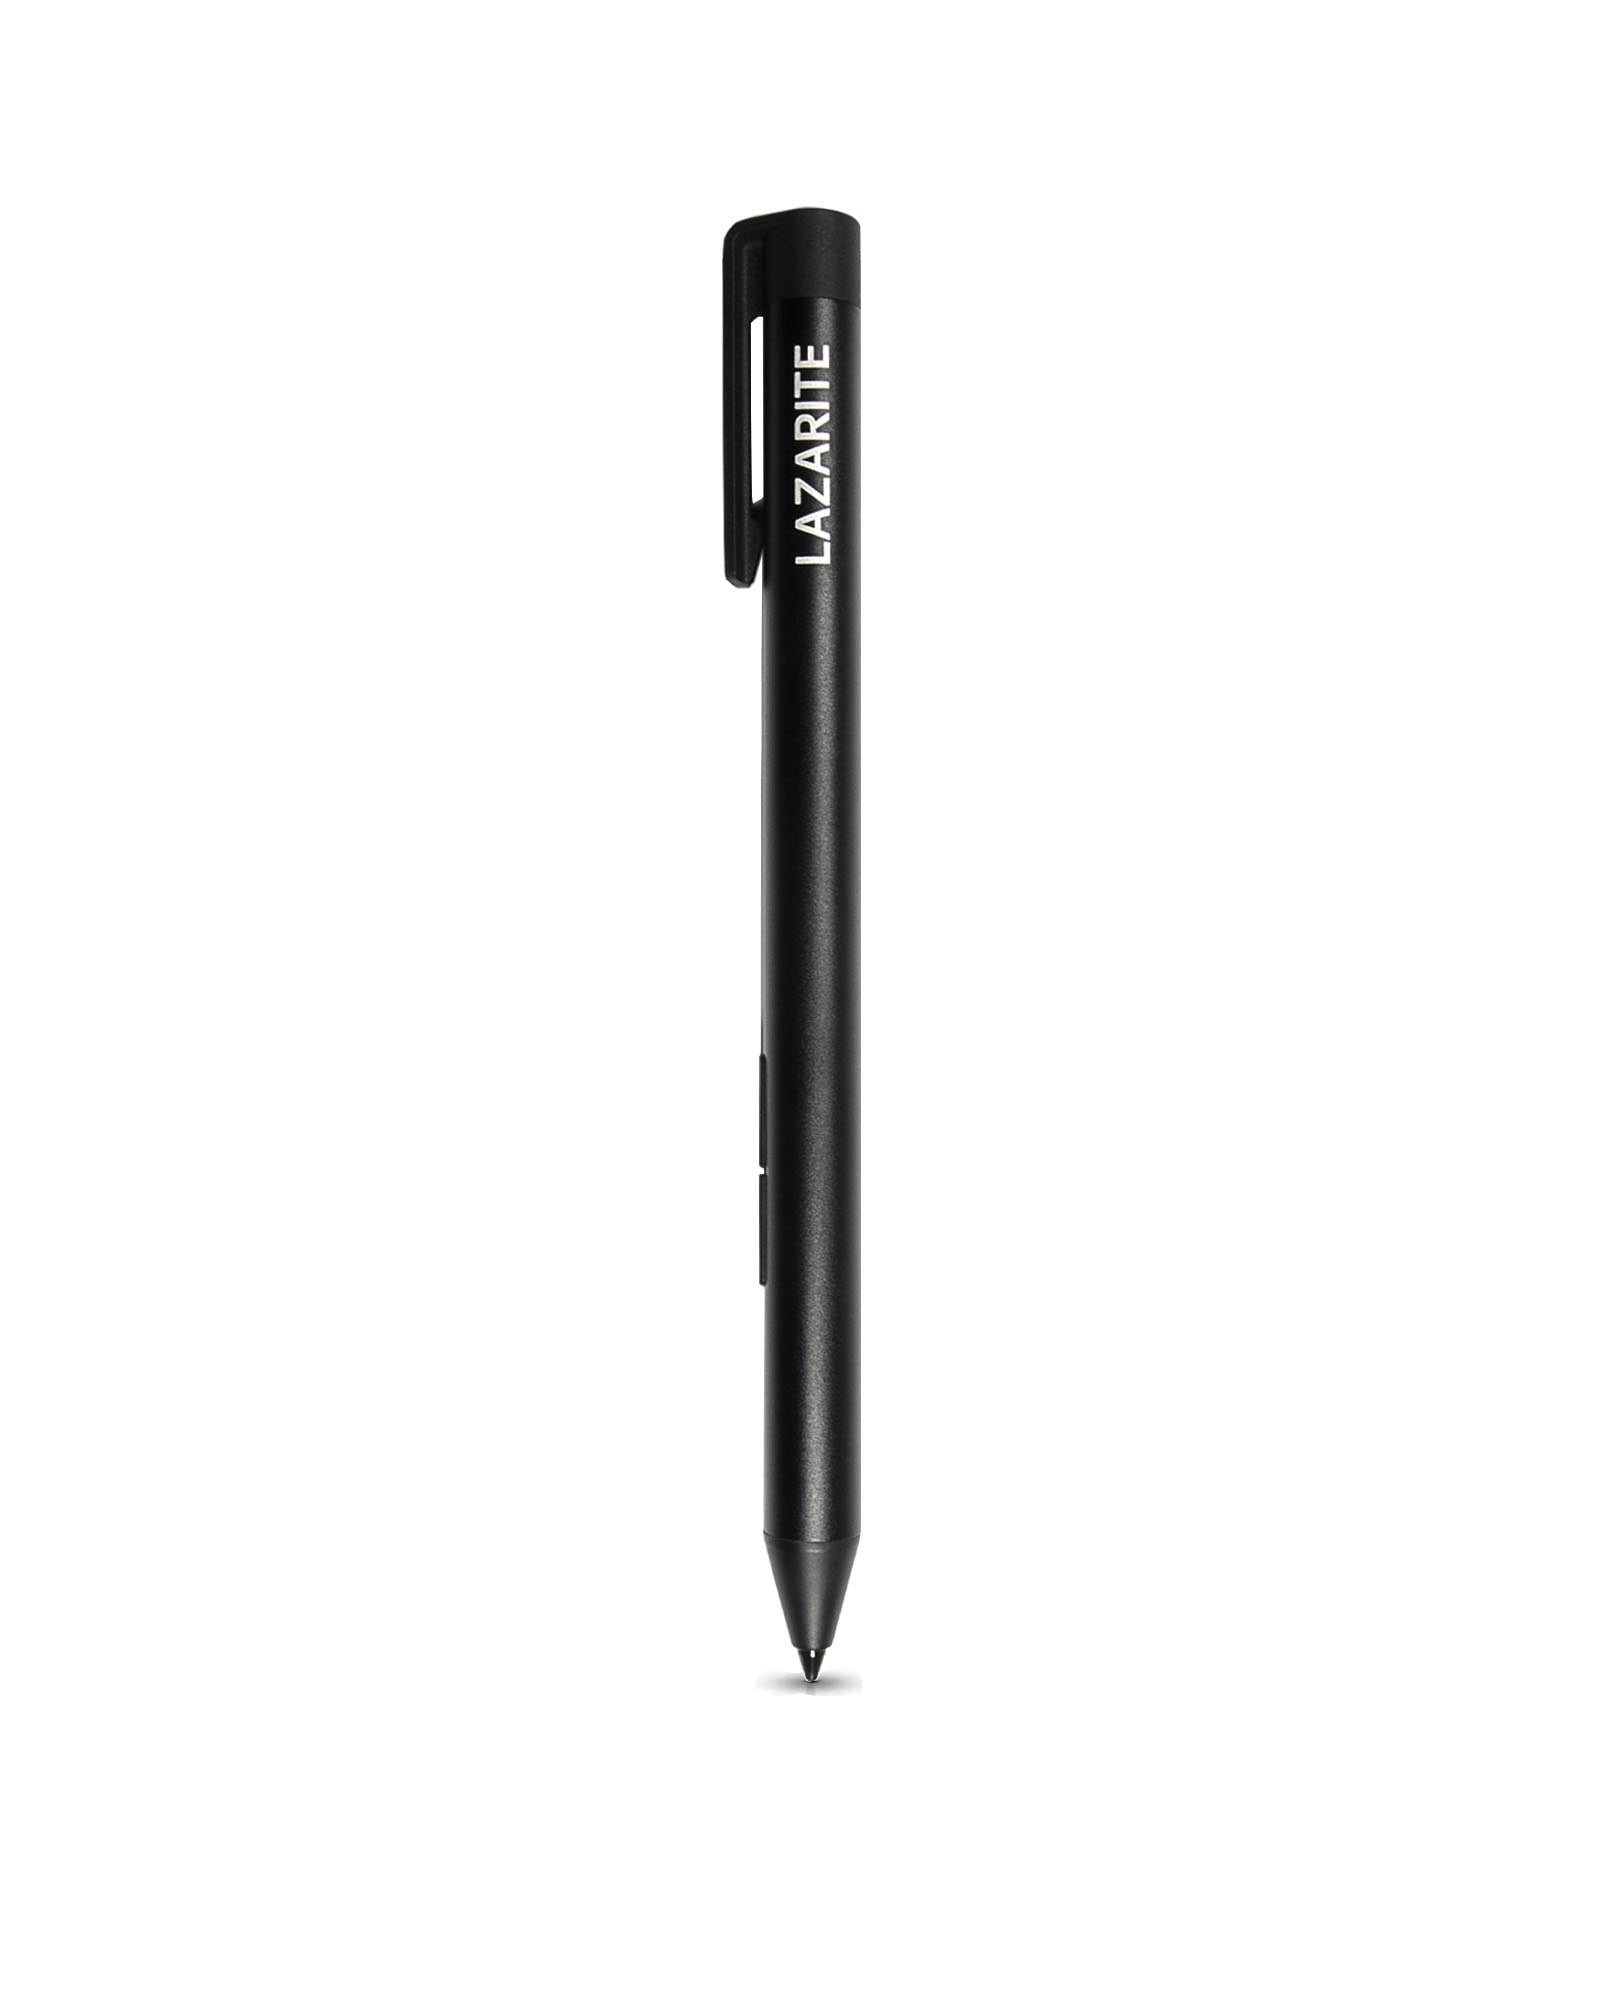 LAZARITE M pen black, Active Stylus pen for Lenovo flex5/14, Yoga  7i/9i/720/730, ASUS zenbook 